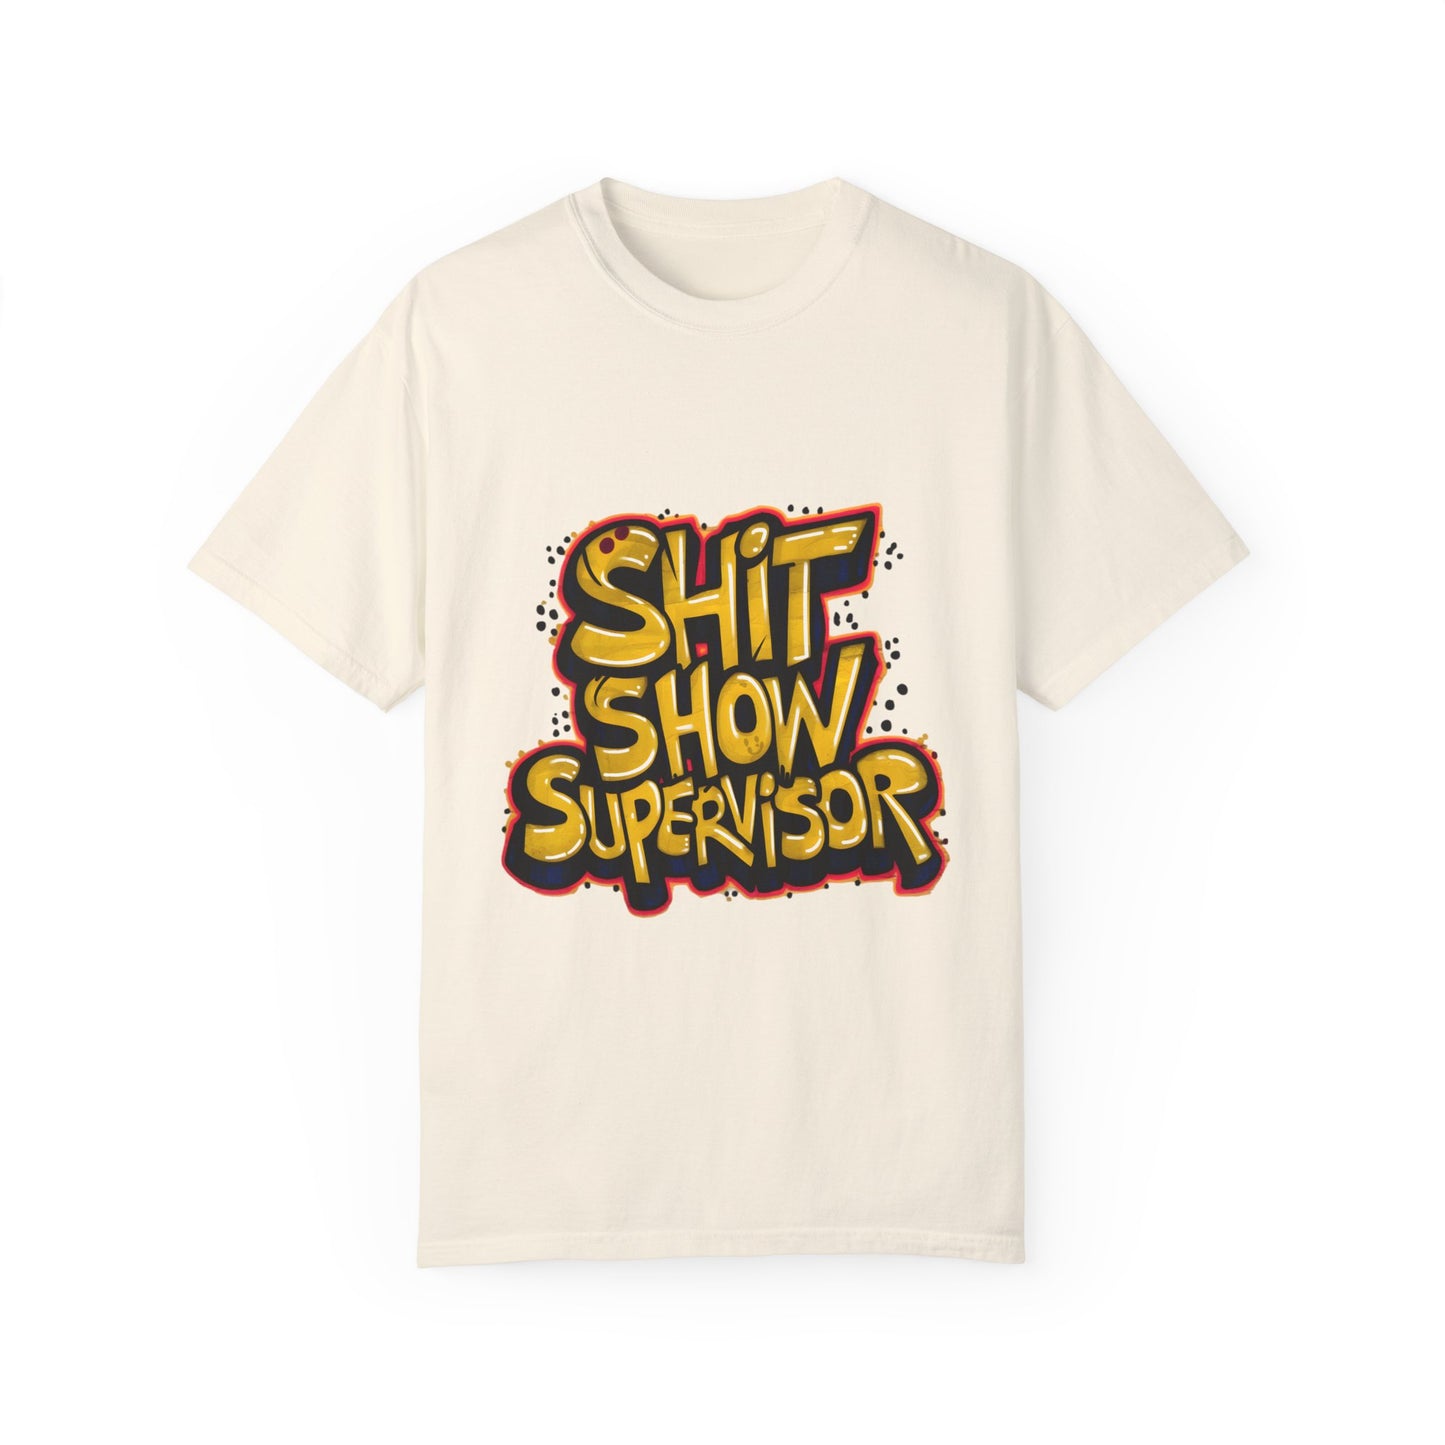 Shit Show Supervisor Urban Sarcastic Graphic Unisex Garment Dyed T-shirt Cotton Funny Humorous Graphic Soft Premium Unisex Men Women Ivory T-shirt Birthday Gift-10